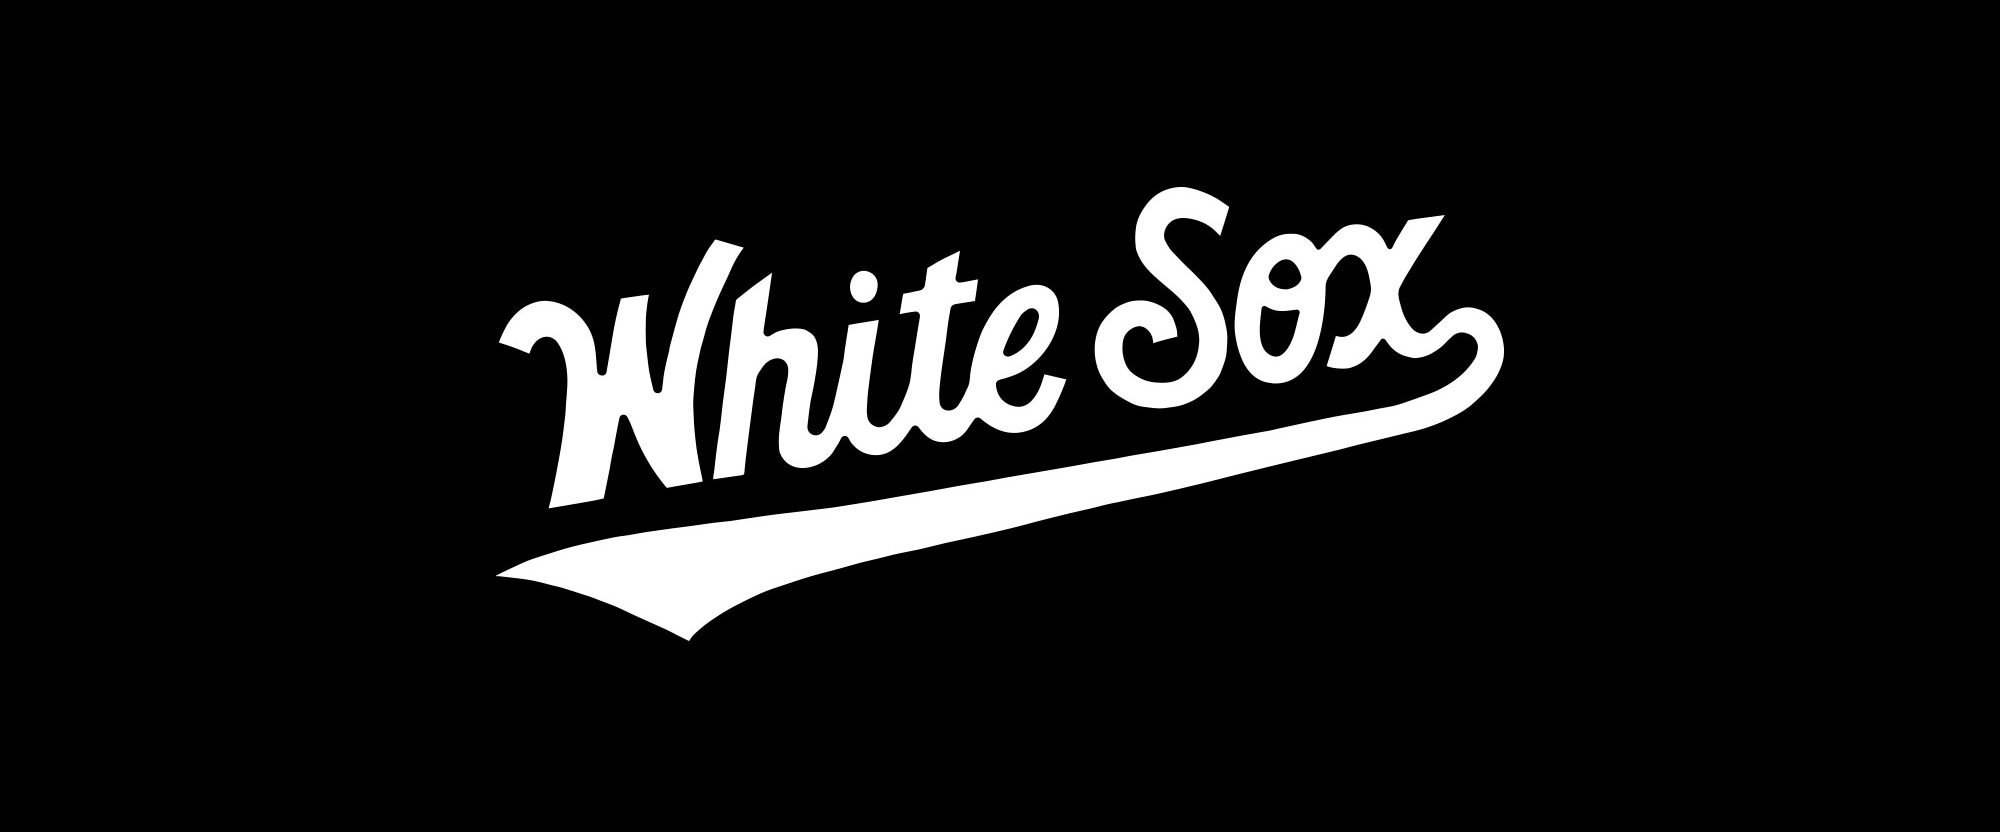 chicago white sox jersey uk